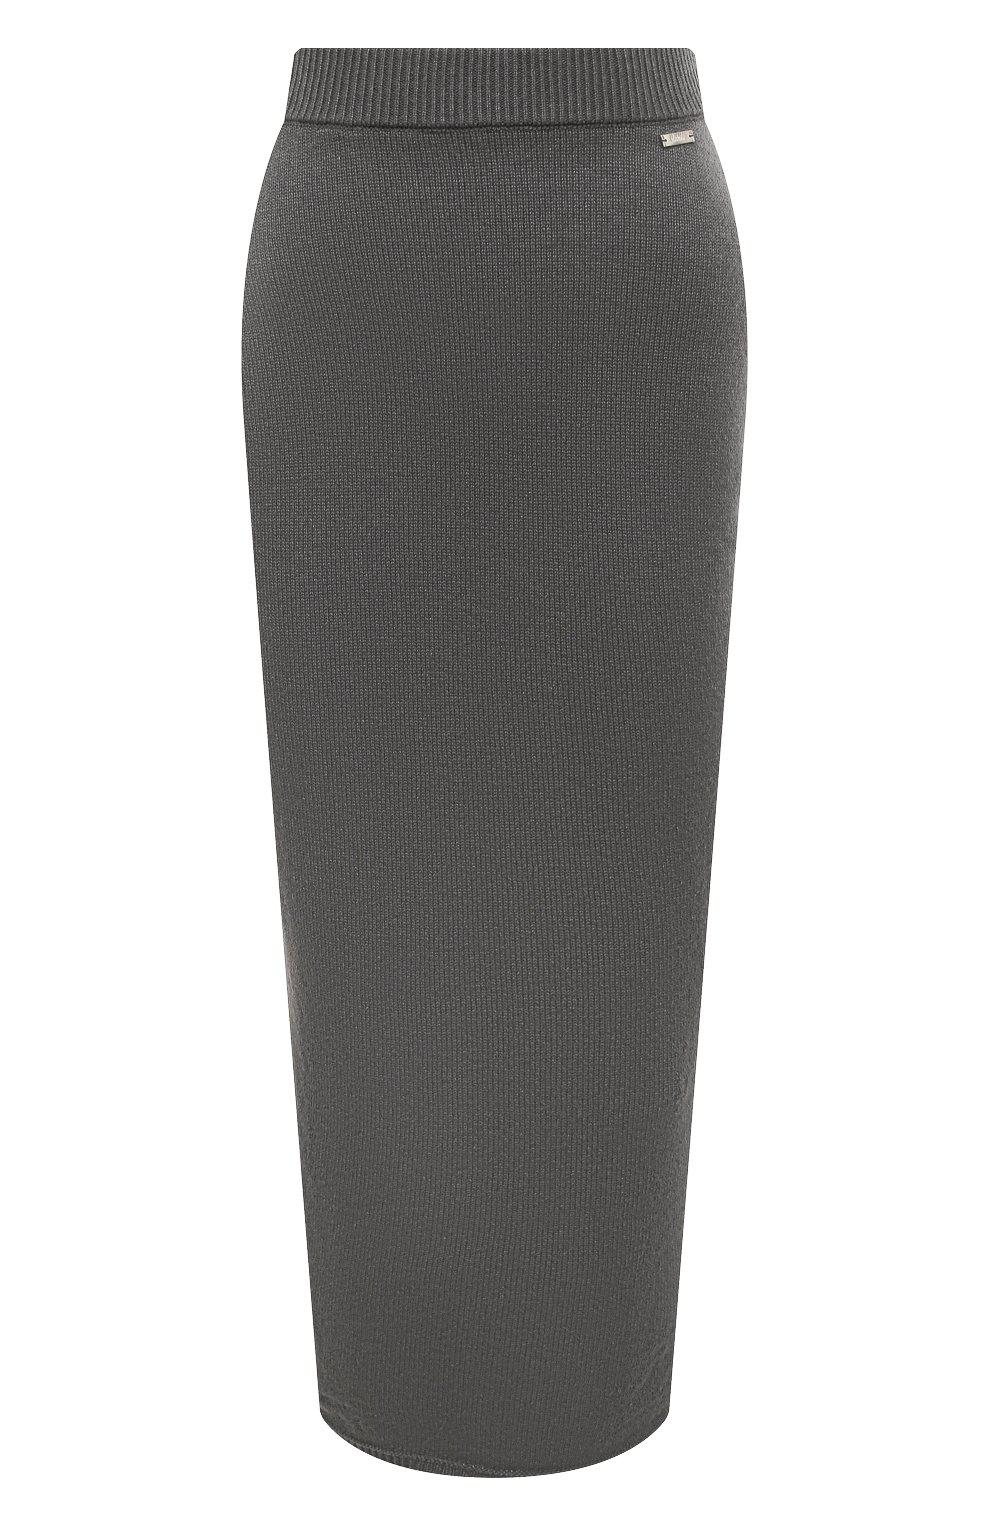 Кашемировая юбка, Kiton, 108 500 руб.